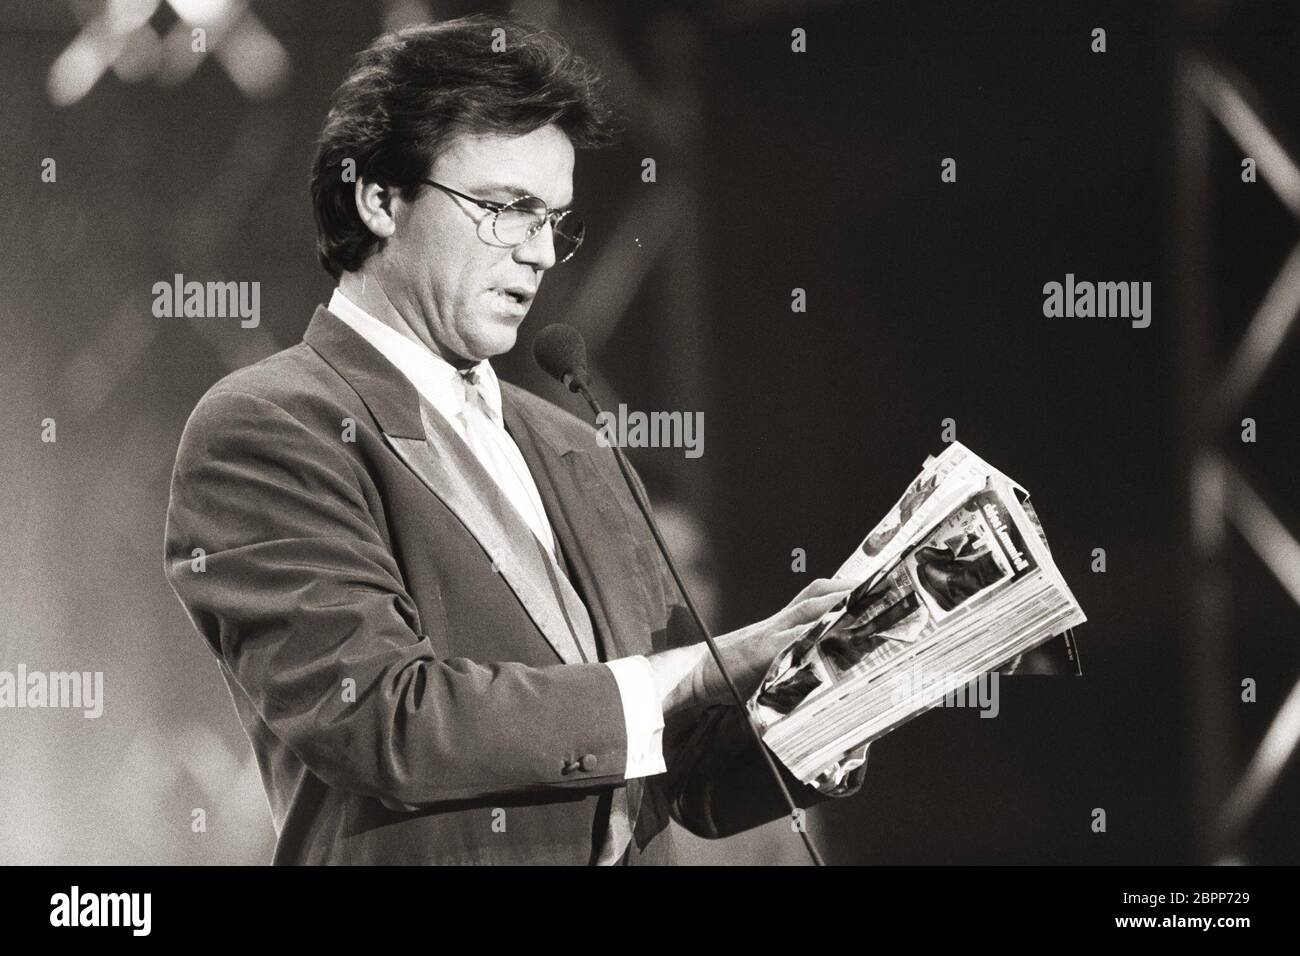 BAMBI Verleihung im MARITIM Köln // 11.12.1992 - Auf dem Bild der Entertainer Wolfgang Lippert im MARITIM Köln in den 90ern. Stock Photo